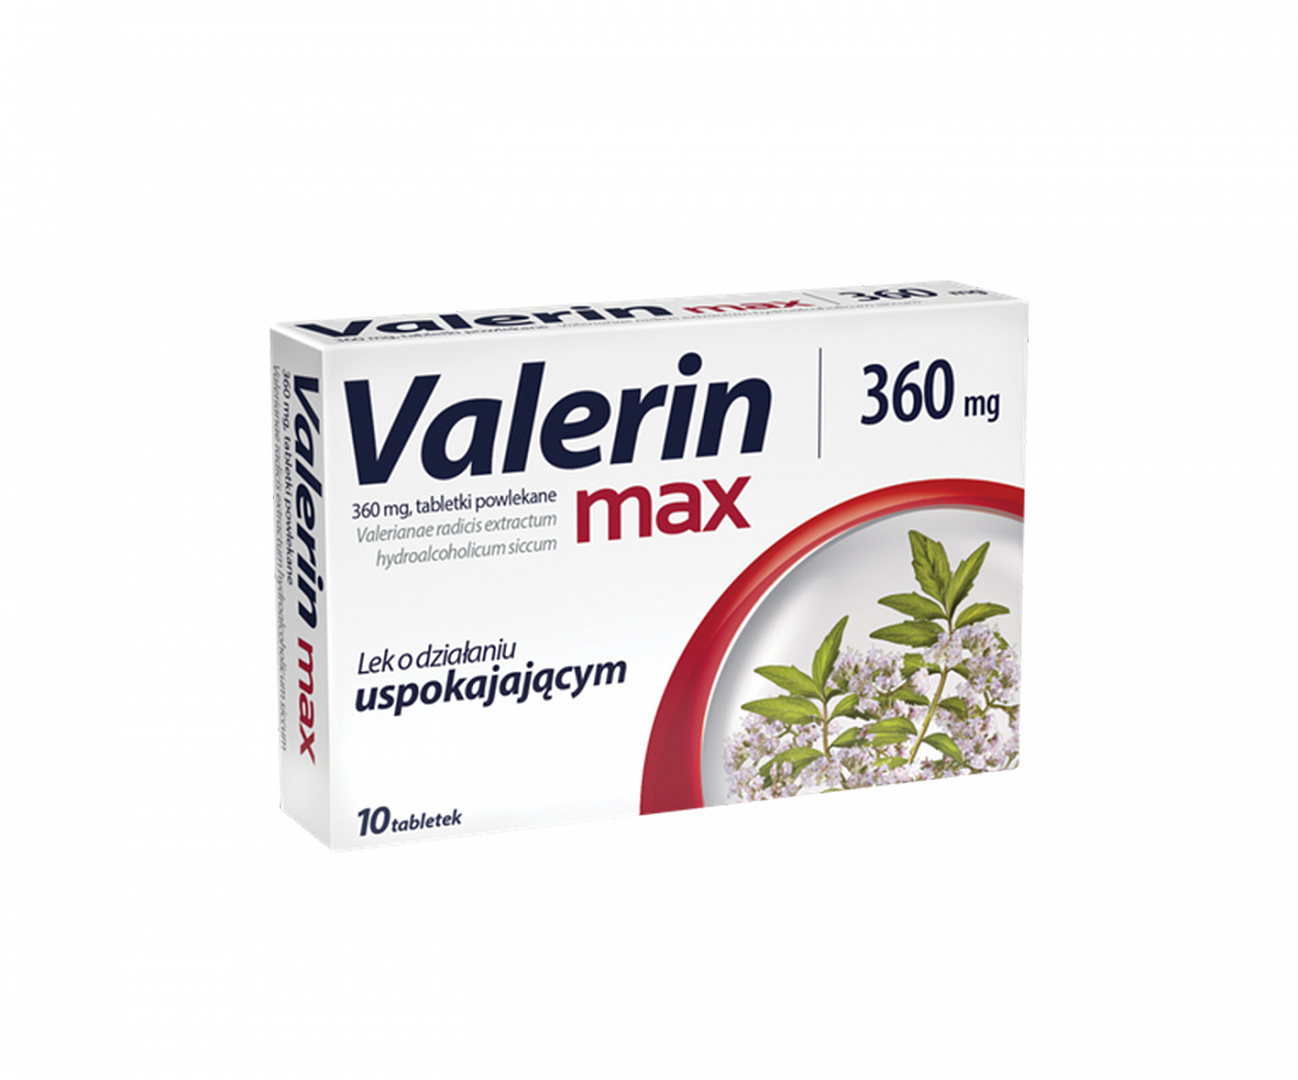 Aflofarm, Valerin Max, Stress Relief Pills with Calming Effect